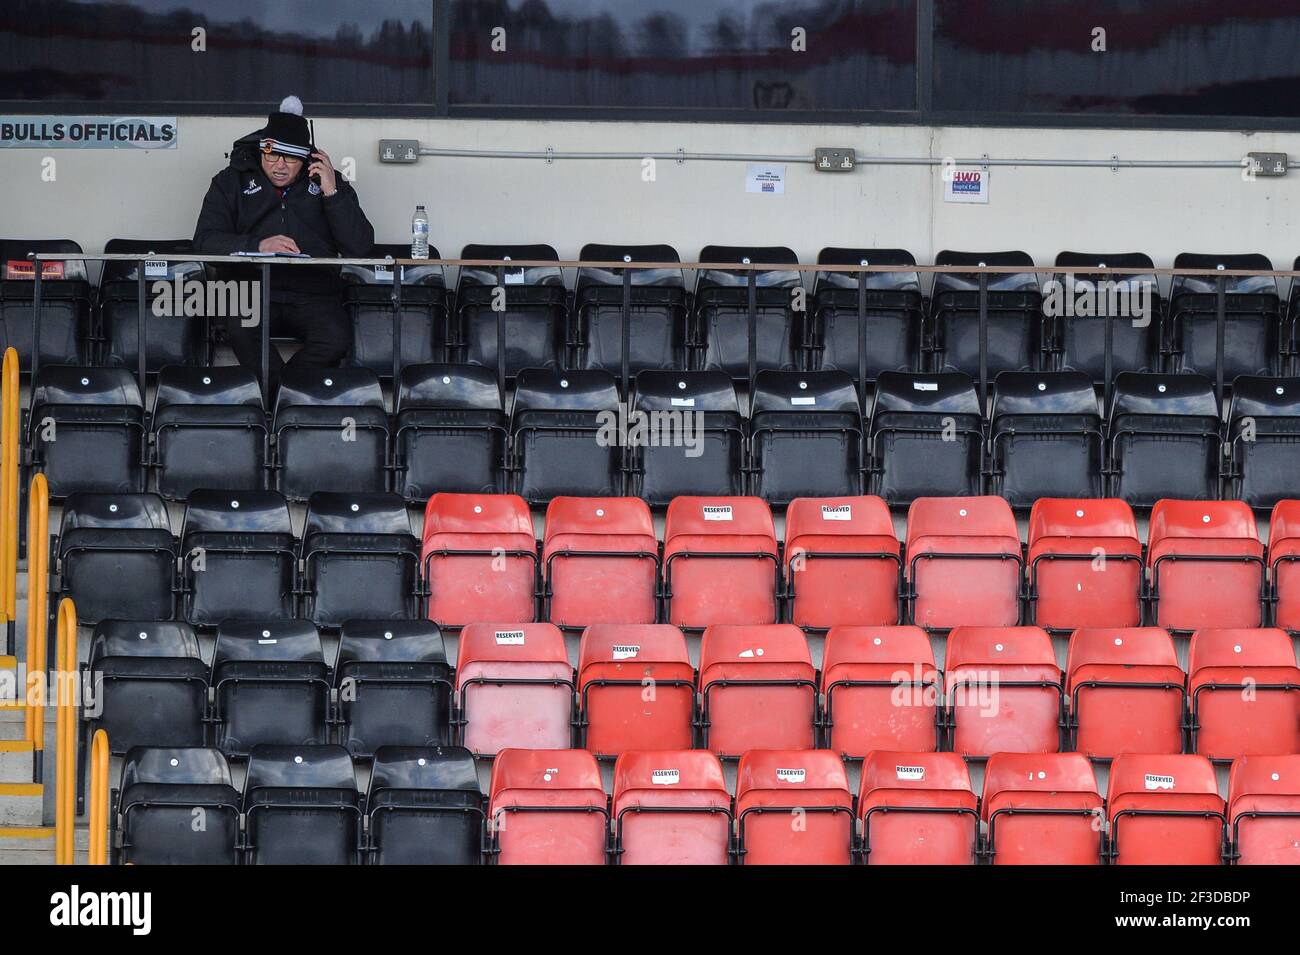 Bradford Bulls’ coach John Kear high in the stands during the match Stock Photo